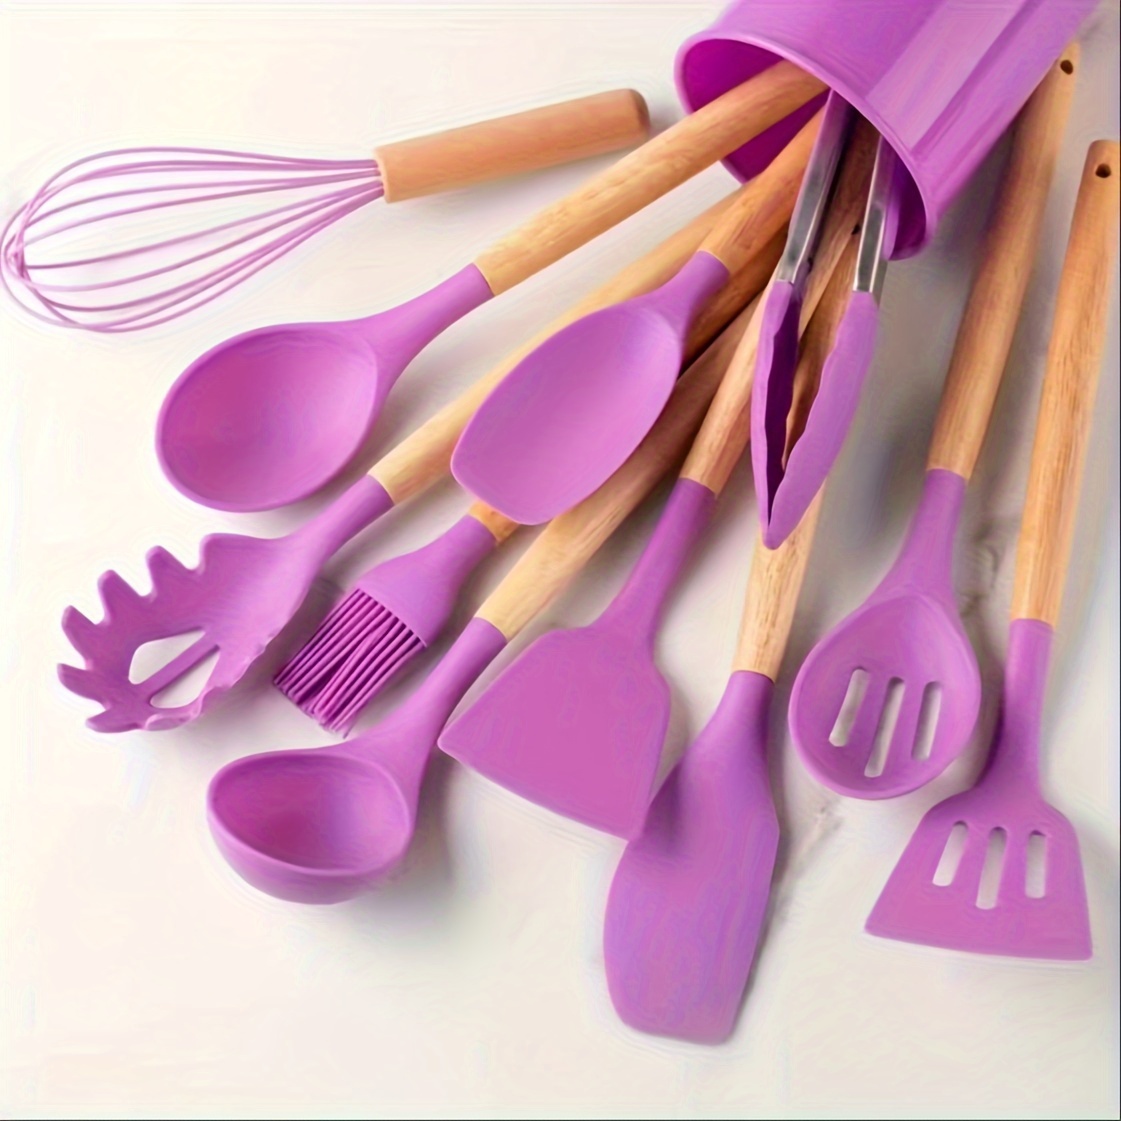 Rorence Utensilios de cocina de silicona Juego de utensilios de cocina: 12  piezas de utensilios de cocina para hornear mezcla antiadherente y